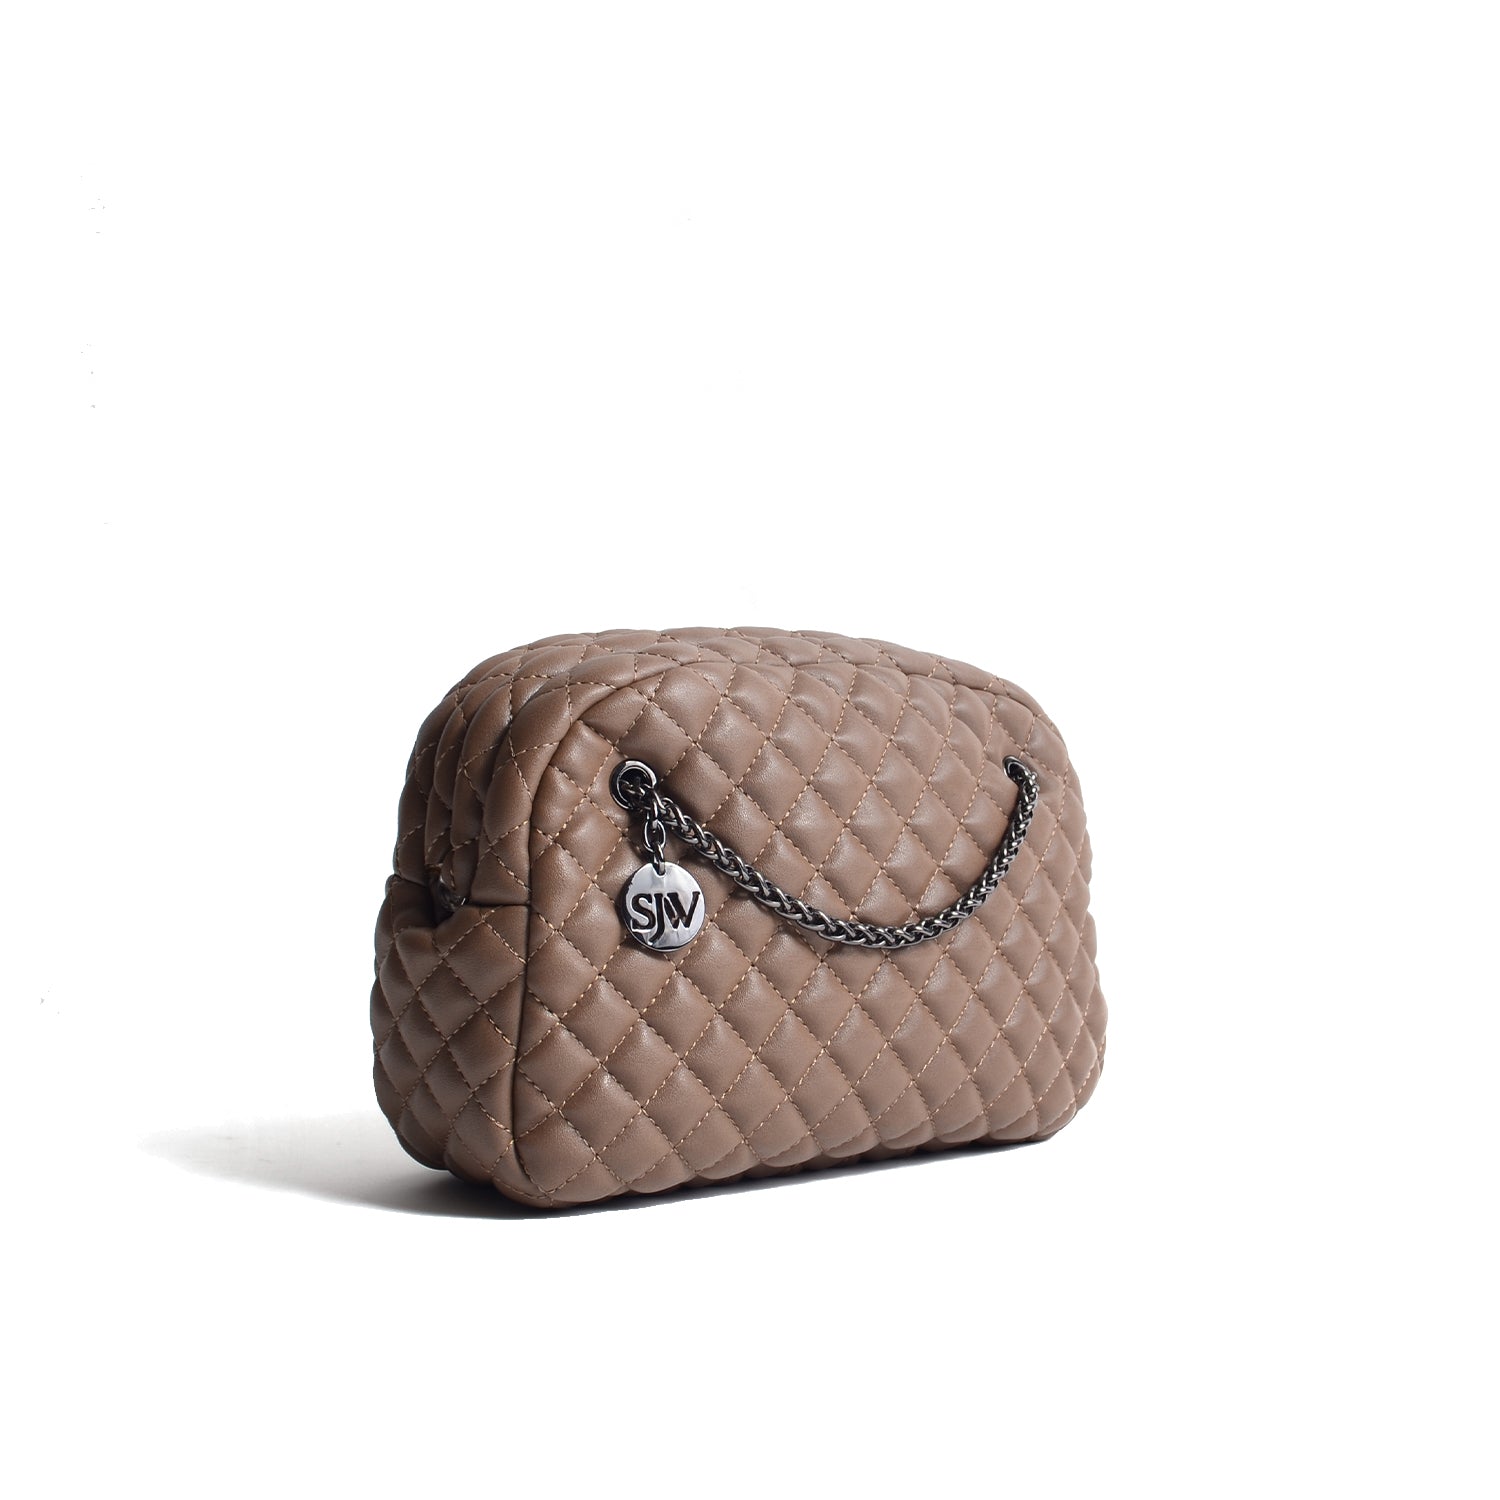 Carlton Vegan Leather Quilted Handbag - Brown - SJW BAGS LONDON